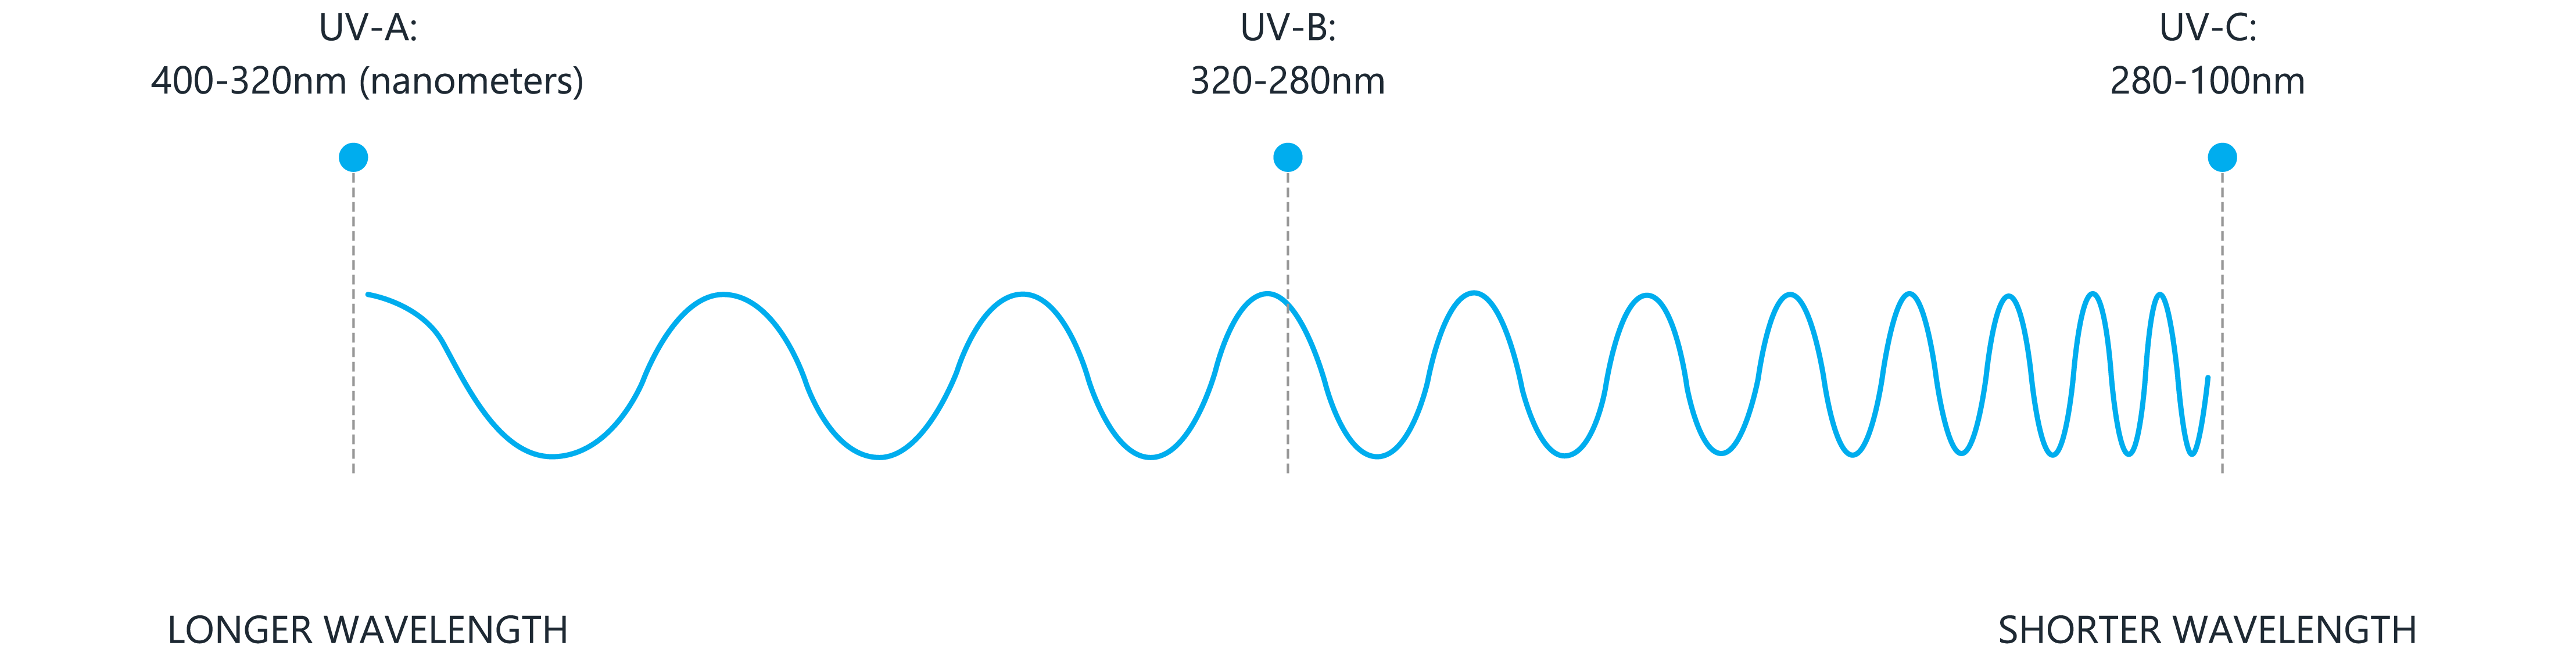 wavelength-graph